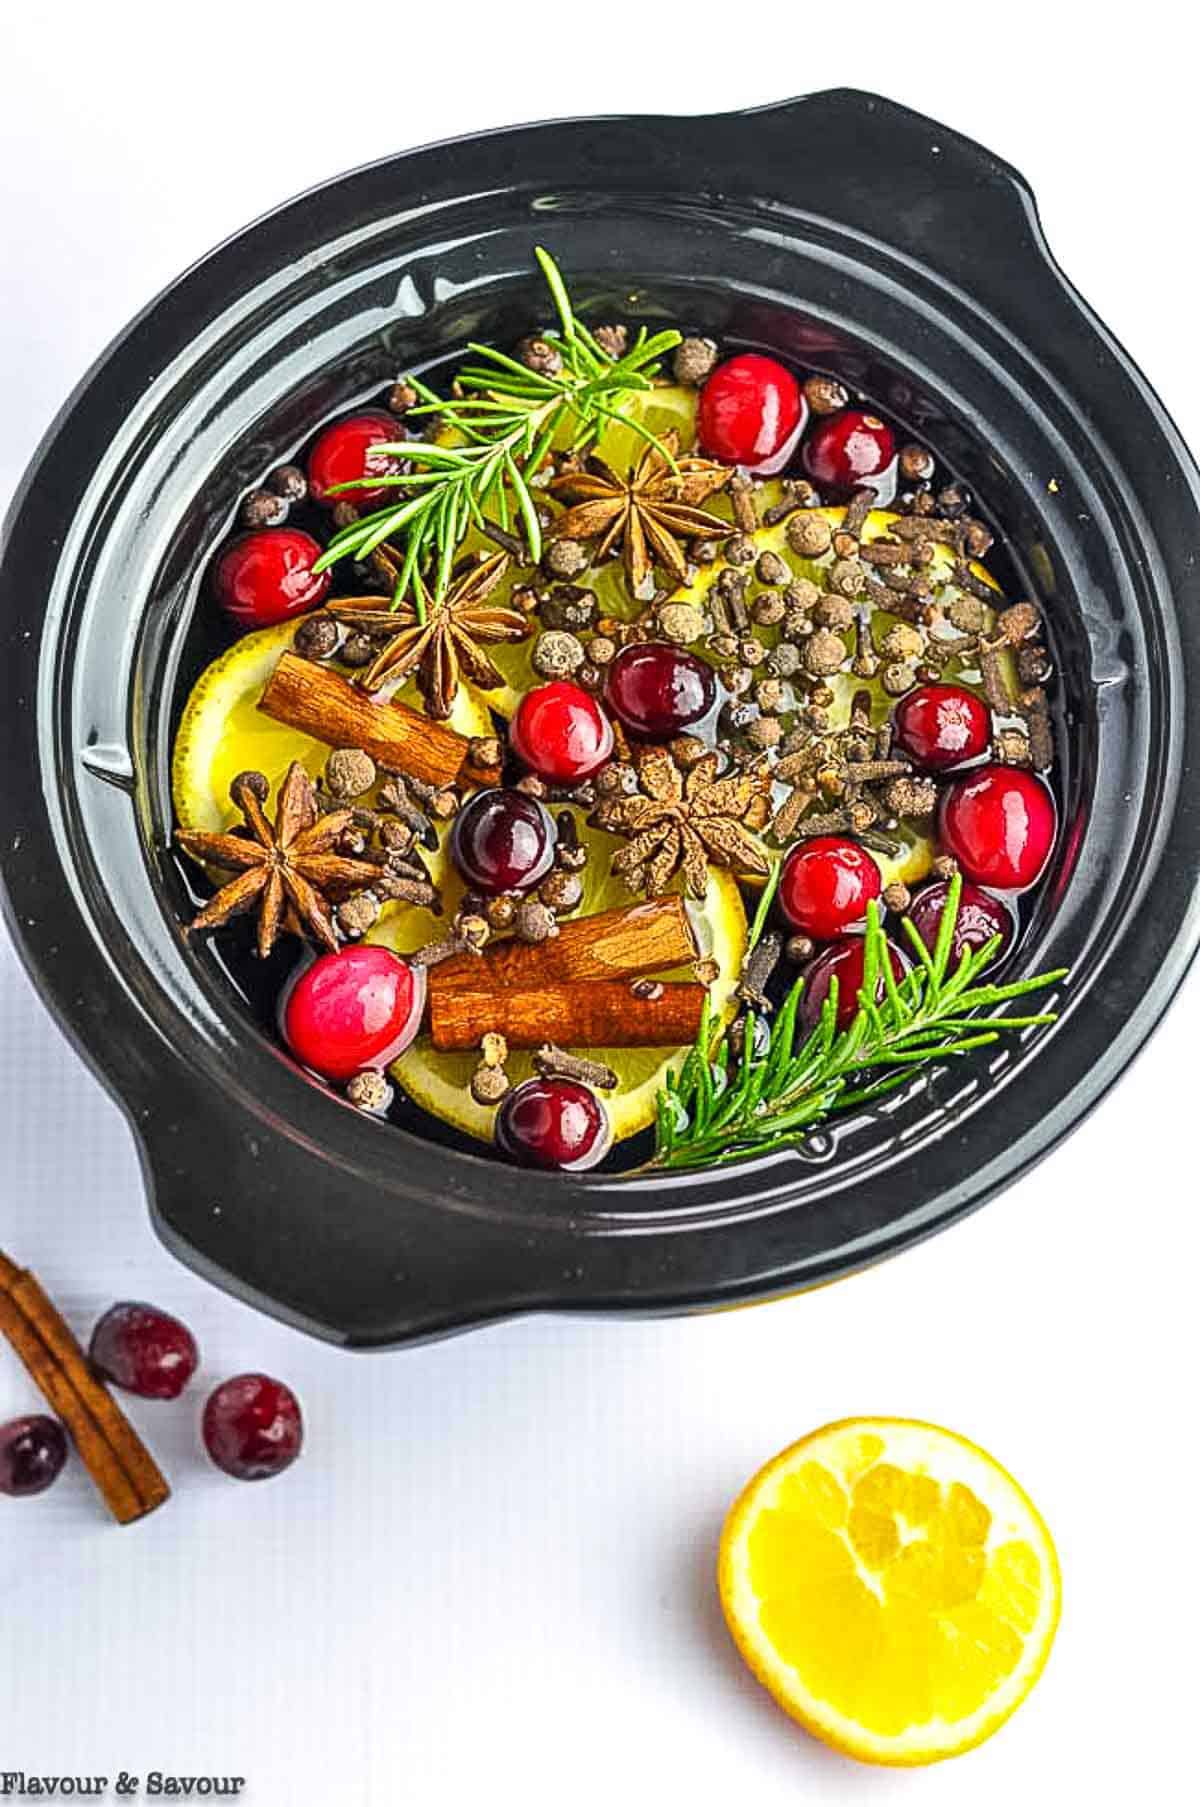 https://www.flavourandsavour.com/wp-content/uploads/2022/08/simmering-holiday-potpourri-mini-cooker.jpg